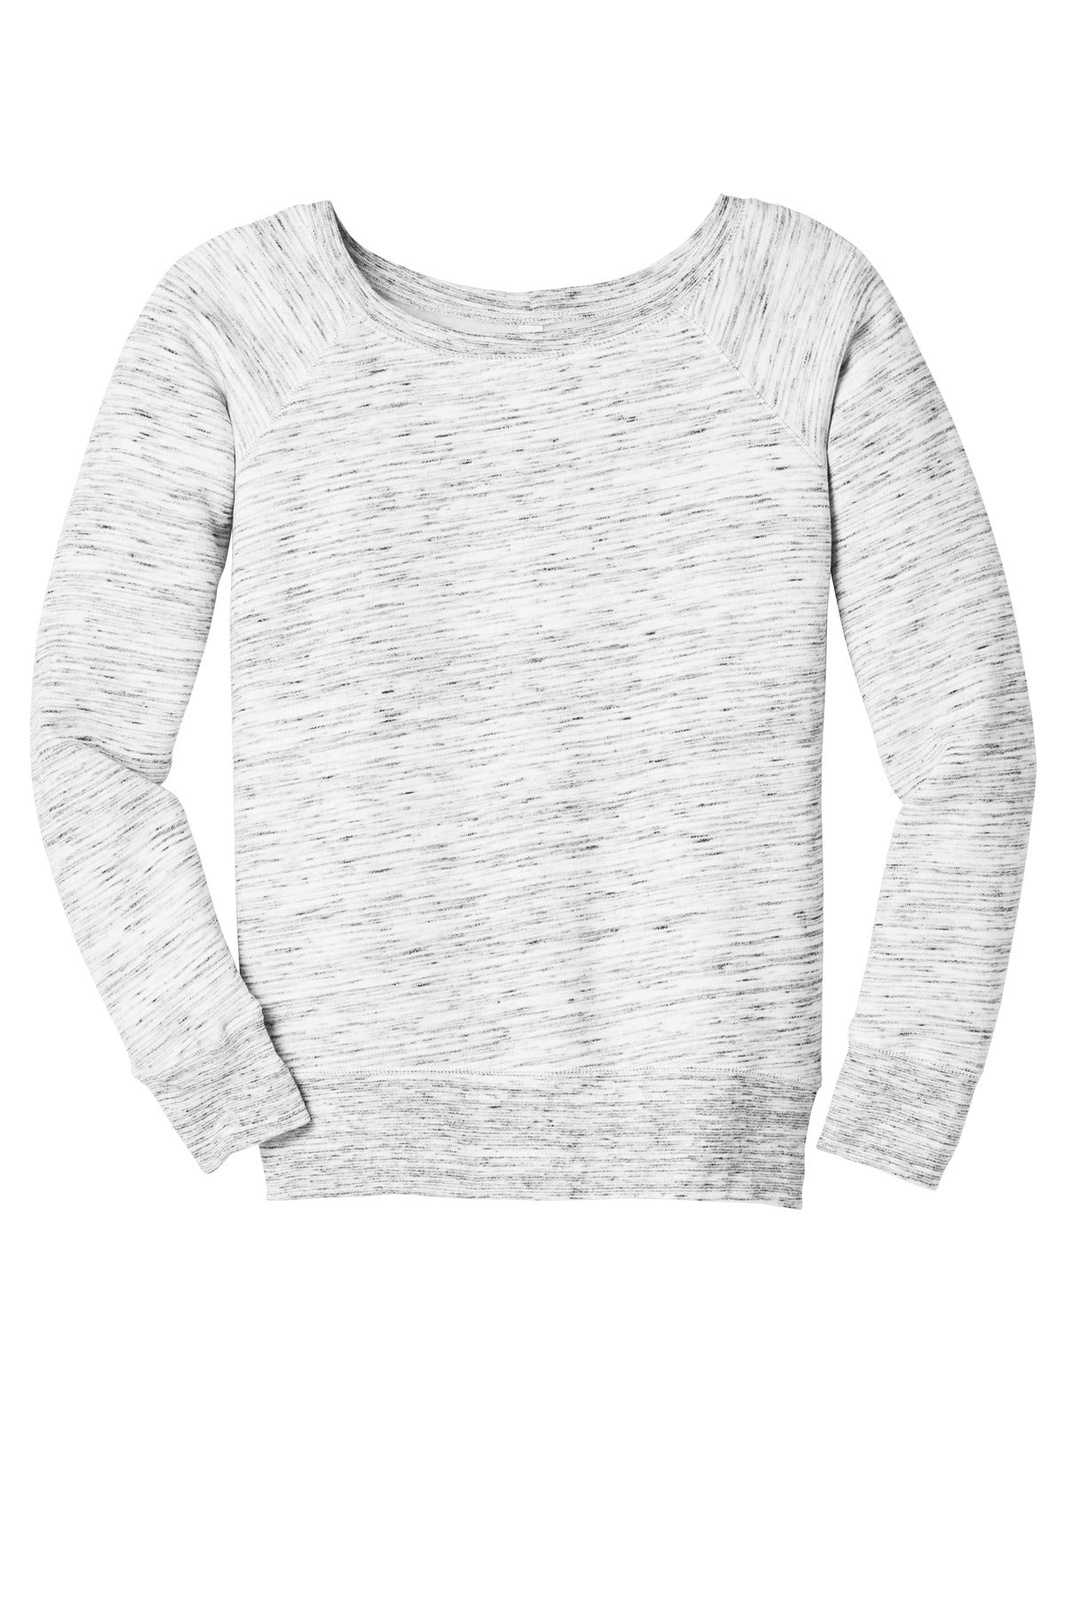 Bella + Canvas 7501 Women's Sponge Fleece Wide-Neck Sweatshirt - Light Gray Marble Fleece - HIT a Double